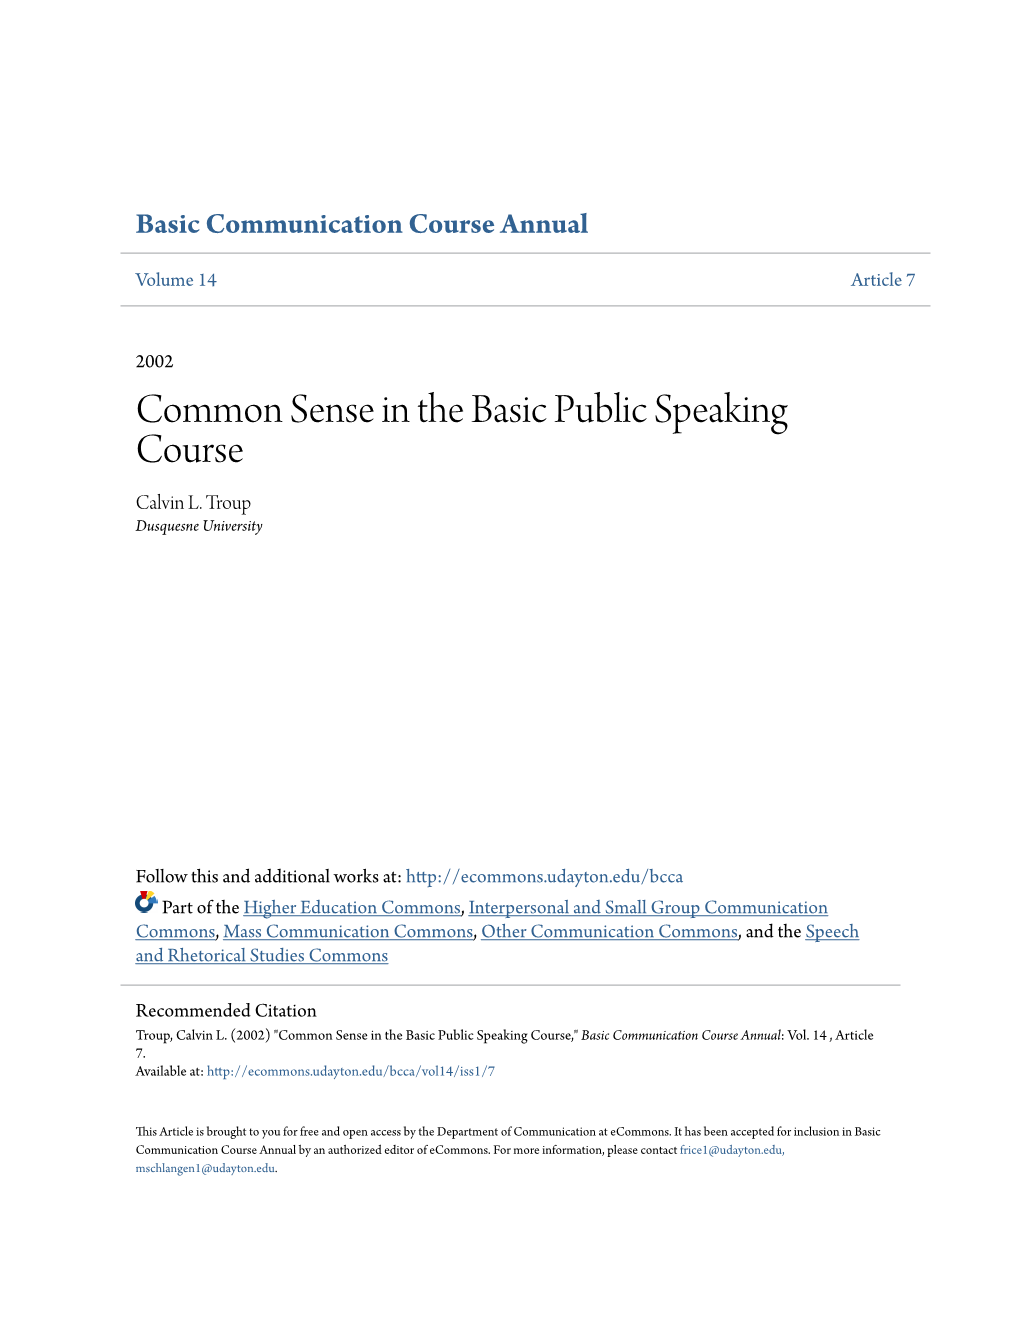 Common Sense in the Basic Public Speaking Course Calvin L